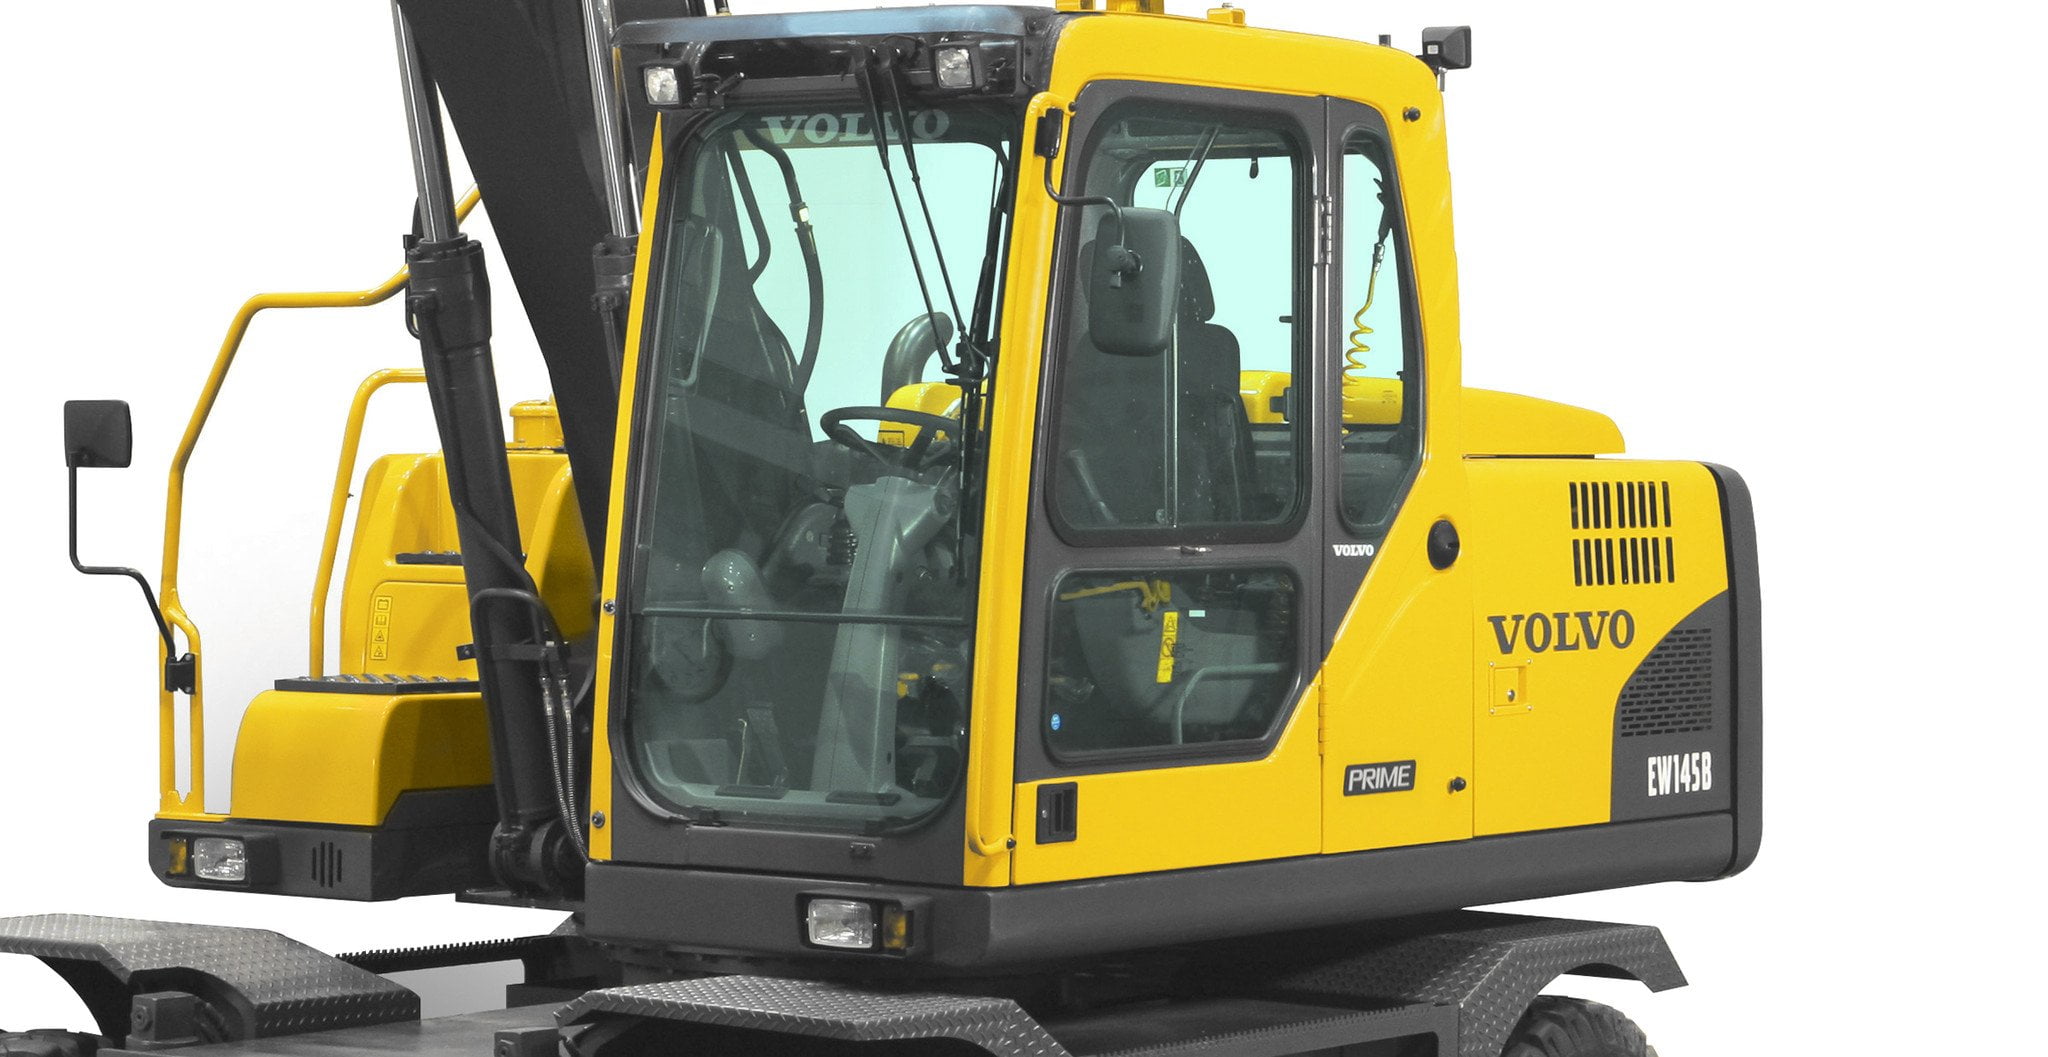 volvo benefits wheeled excavator ew145b prime t3 volvo care cab 2324x1200 1